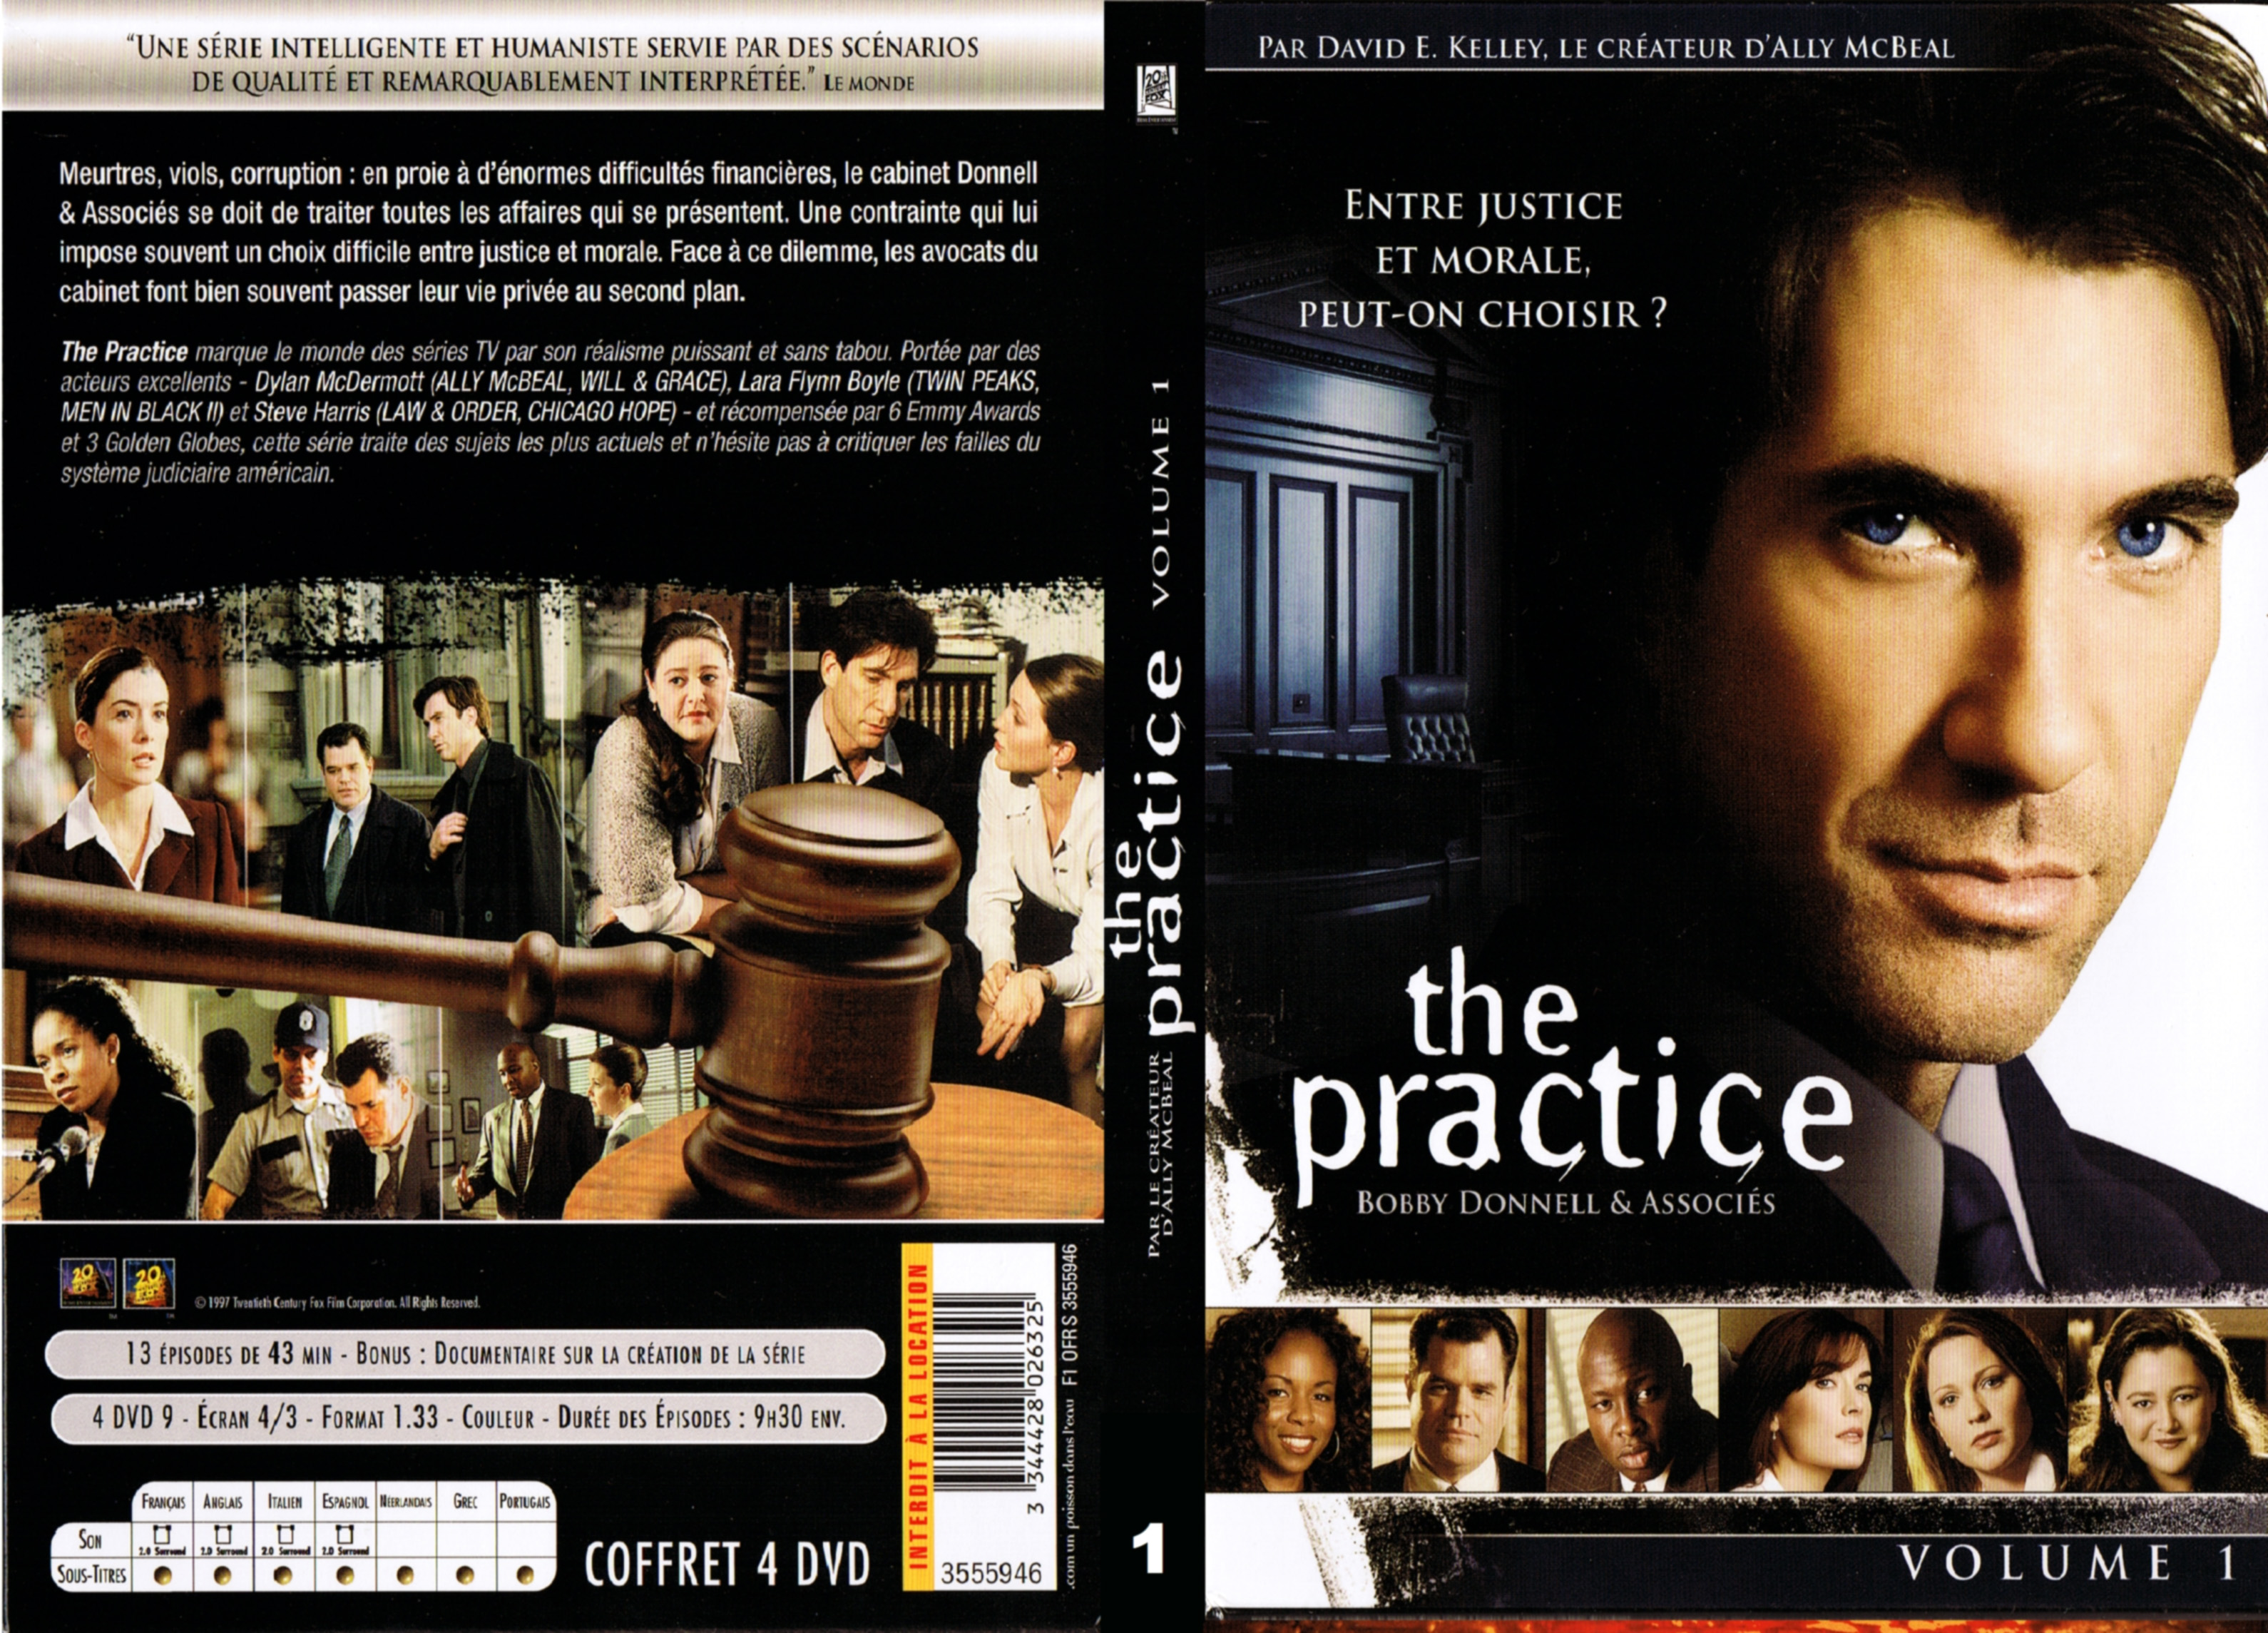 Jaquette DVD The practice vol 1